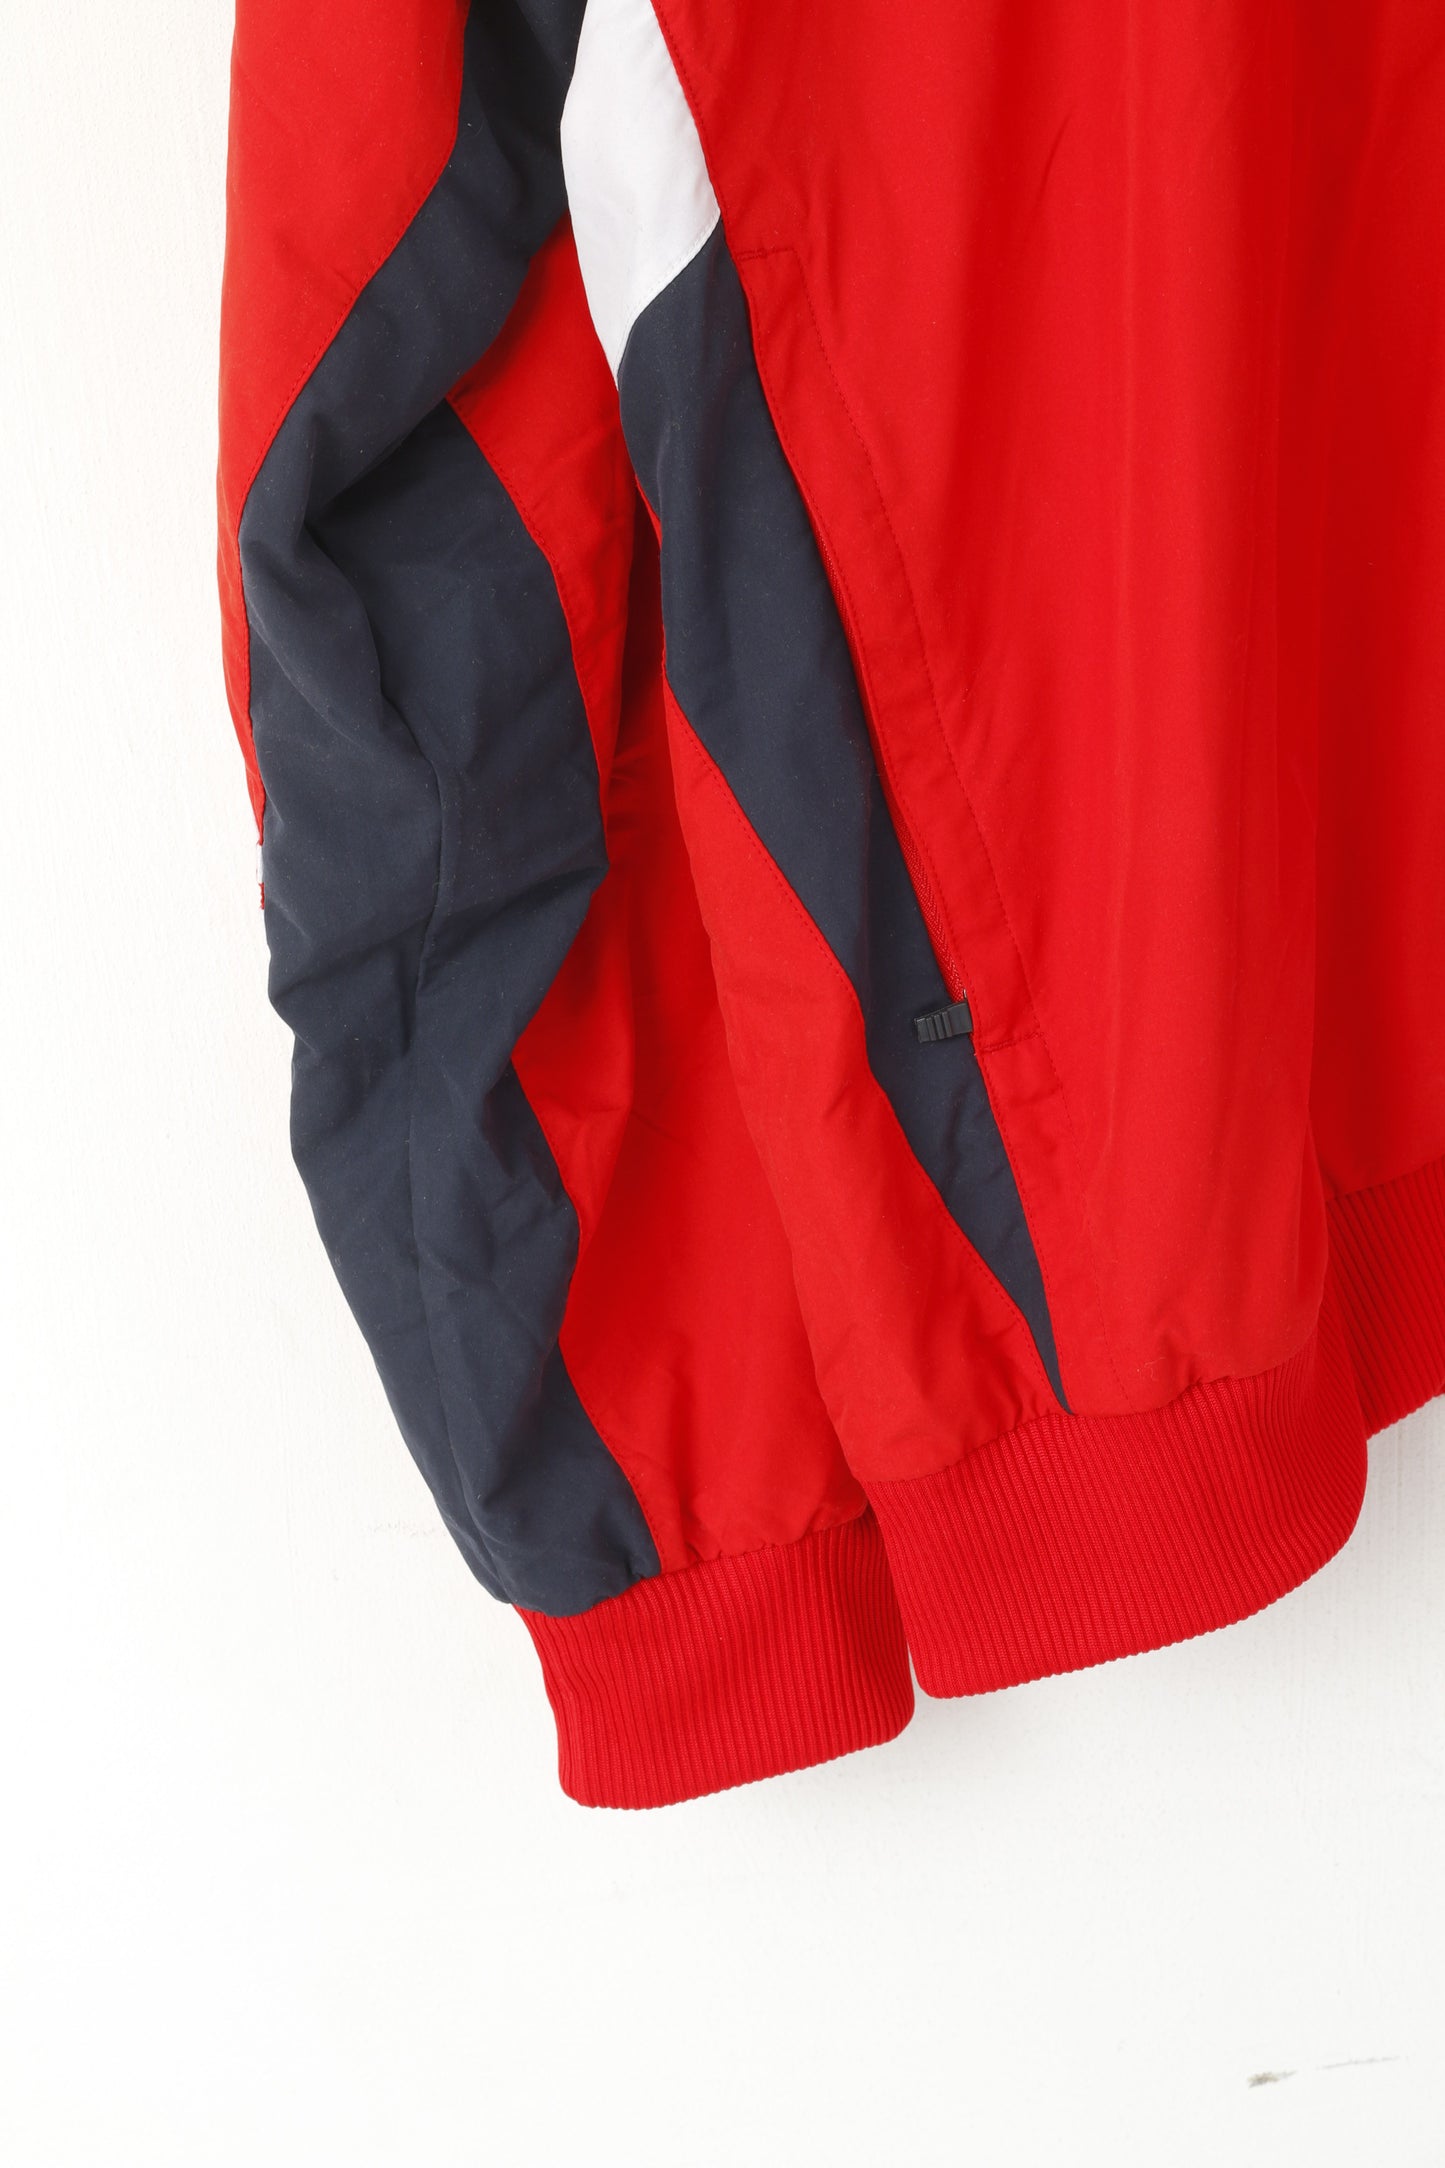 Adidas Men XL Jacket Red Clima 365 Bomber Sportwear Full Zipper Sport Top